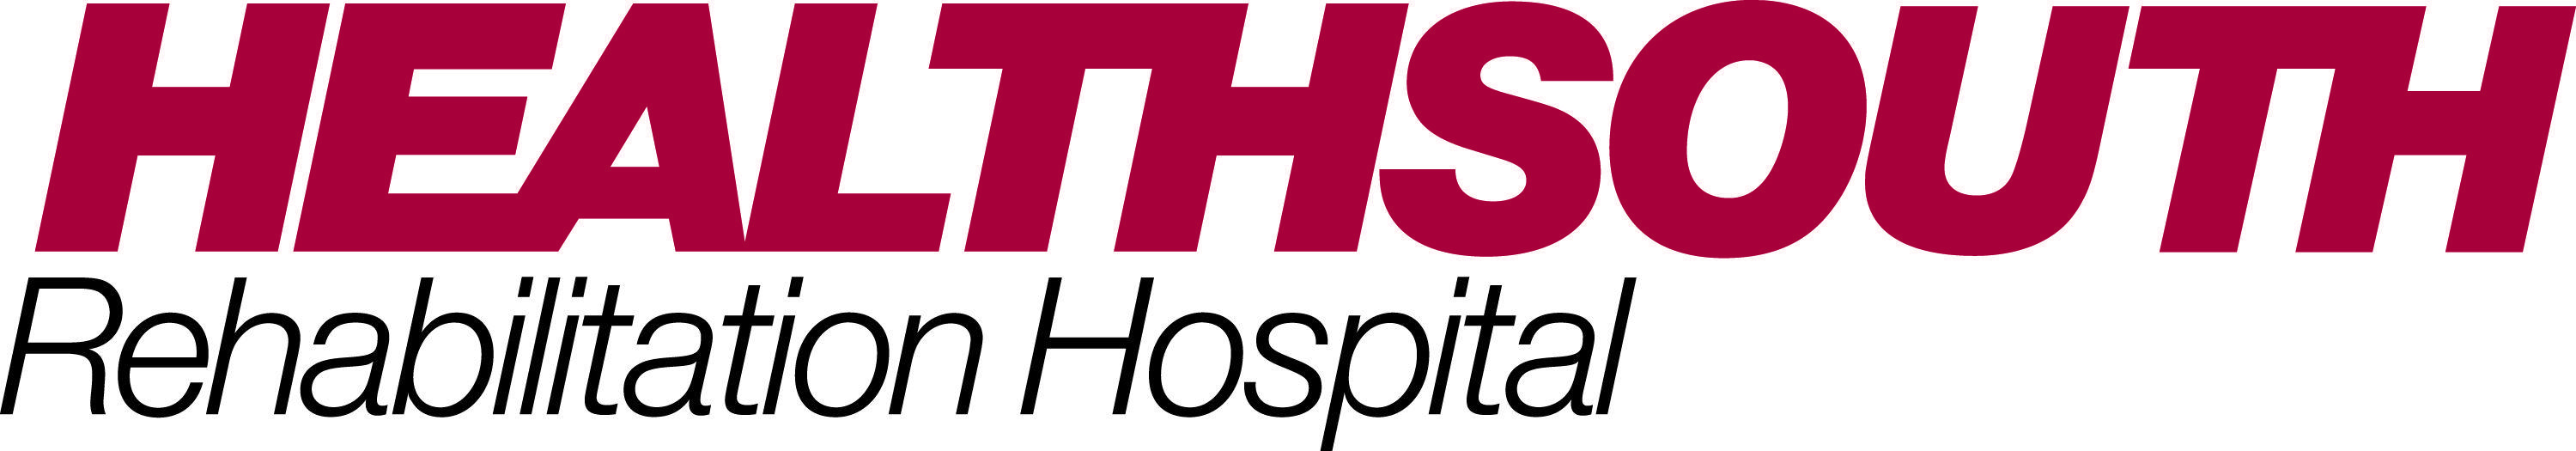 HealthSouth Logo - Sponsors - CMSNE